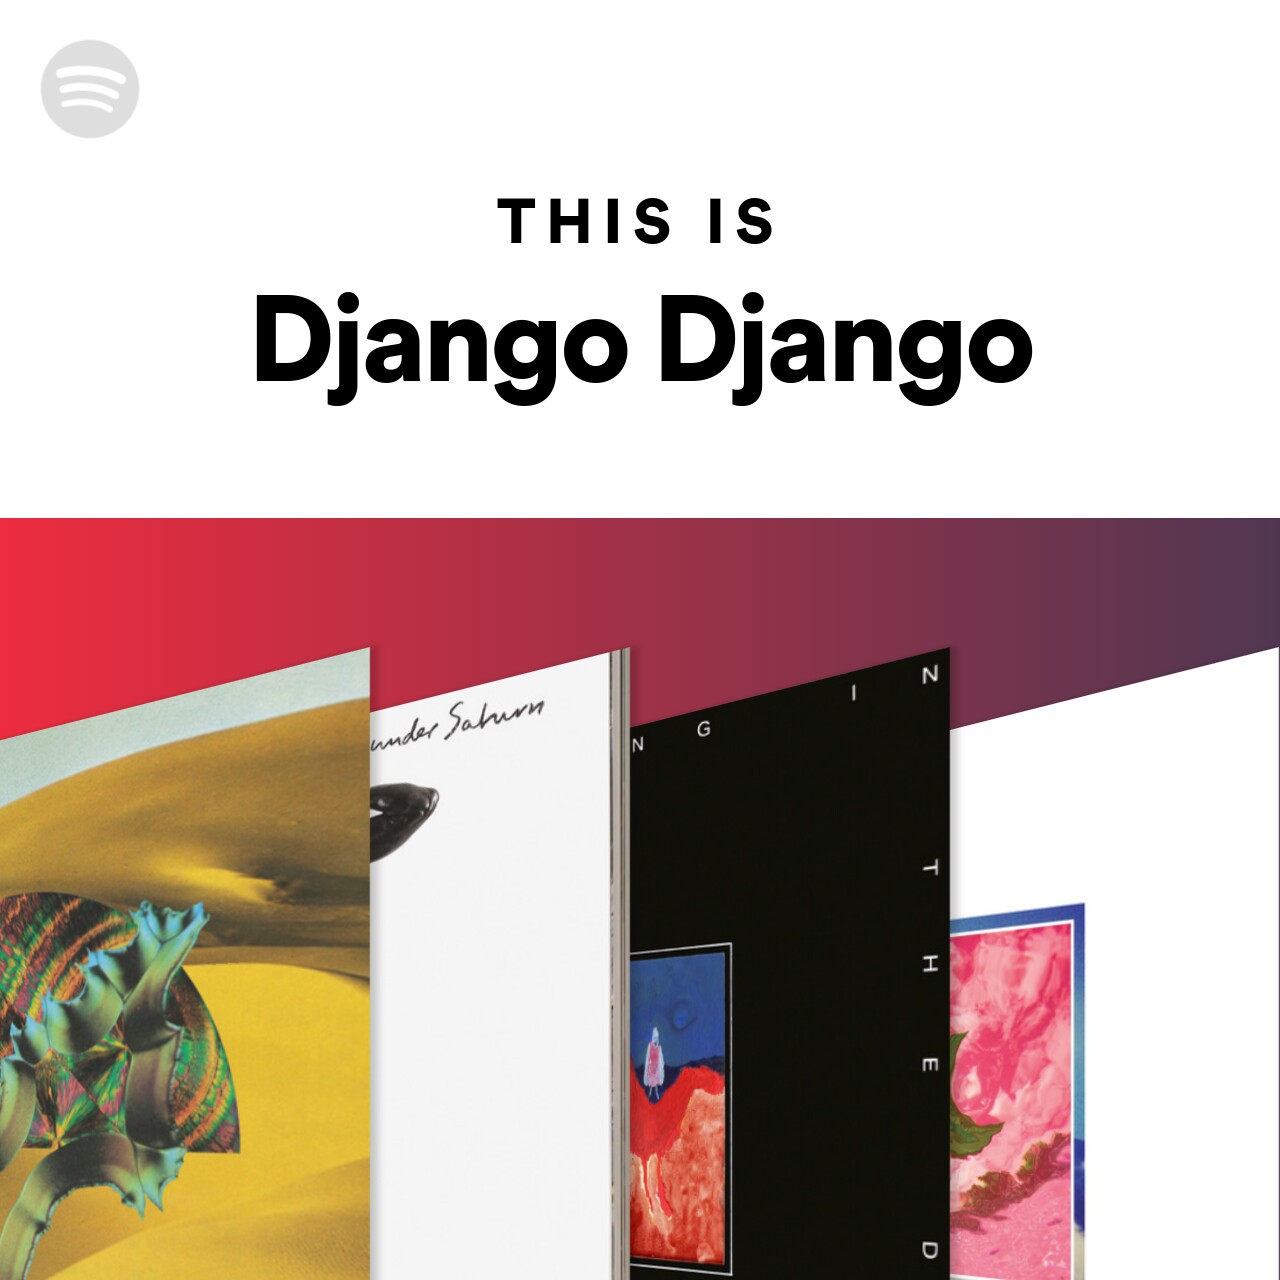 This Is Django Django